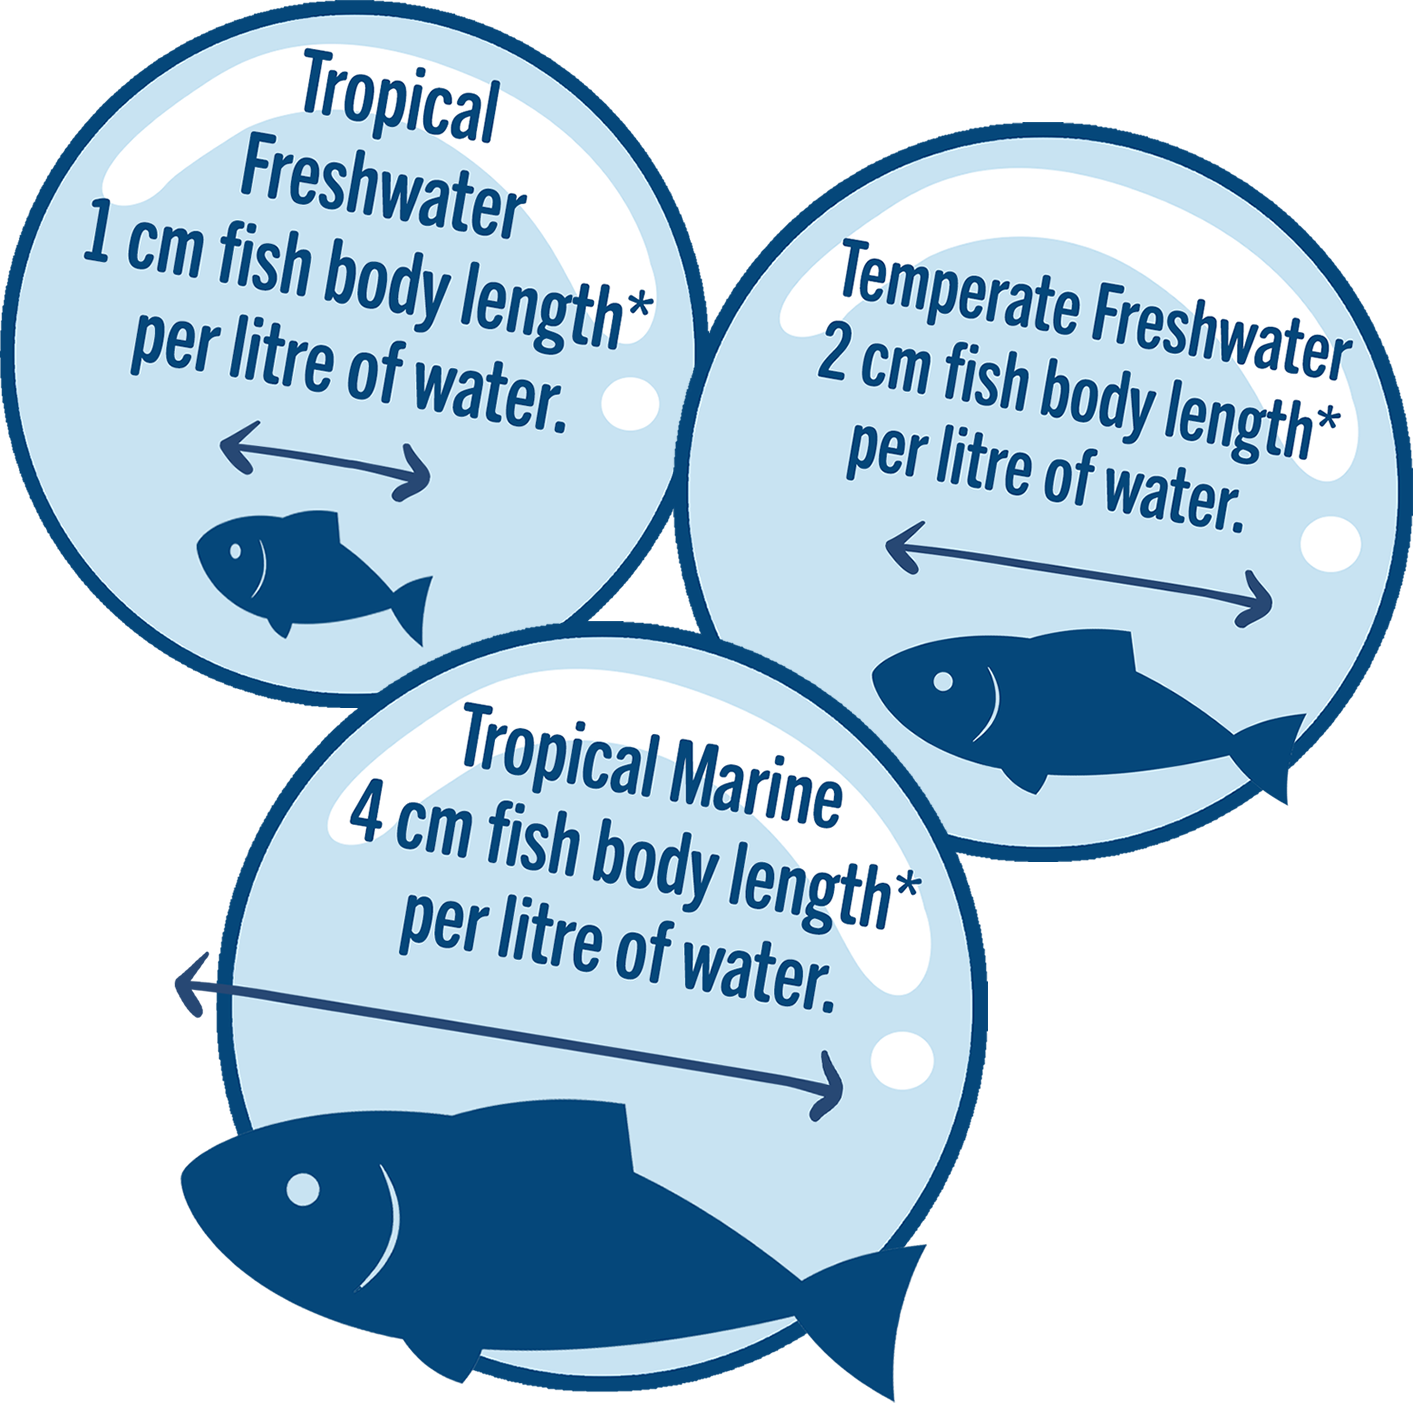 Tropical Freshwater 1cm fish body length* per litre of water. Temperate Freshwater 2cm fish body length* per litre of water. Tropical Marine 4cm fish body length* per litre of water.